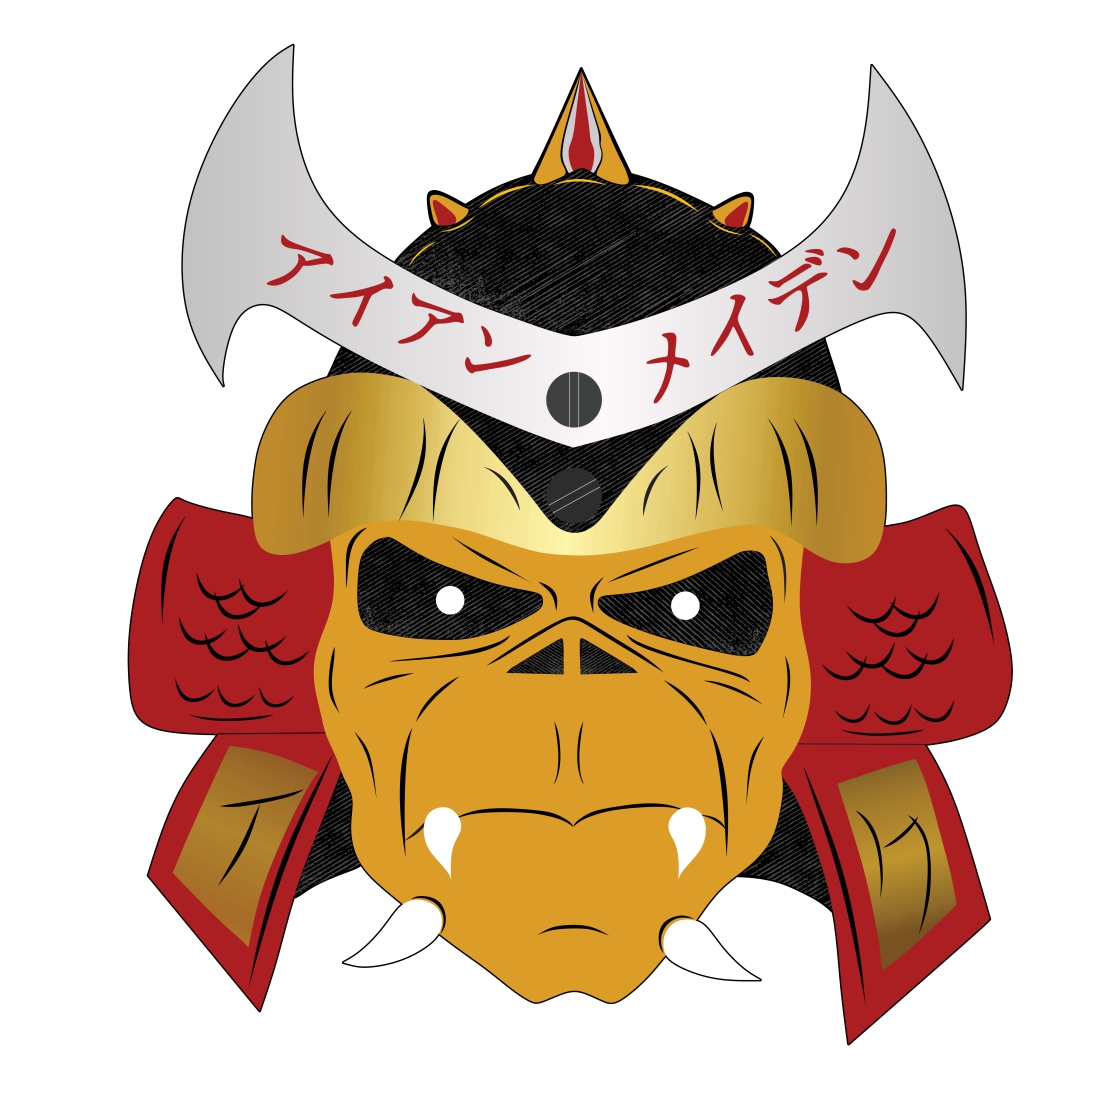 Japanese Samurai Mask cover image.